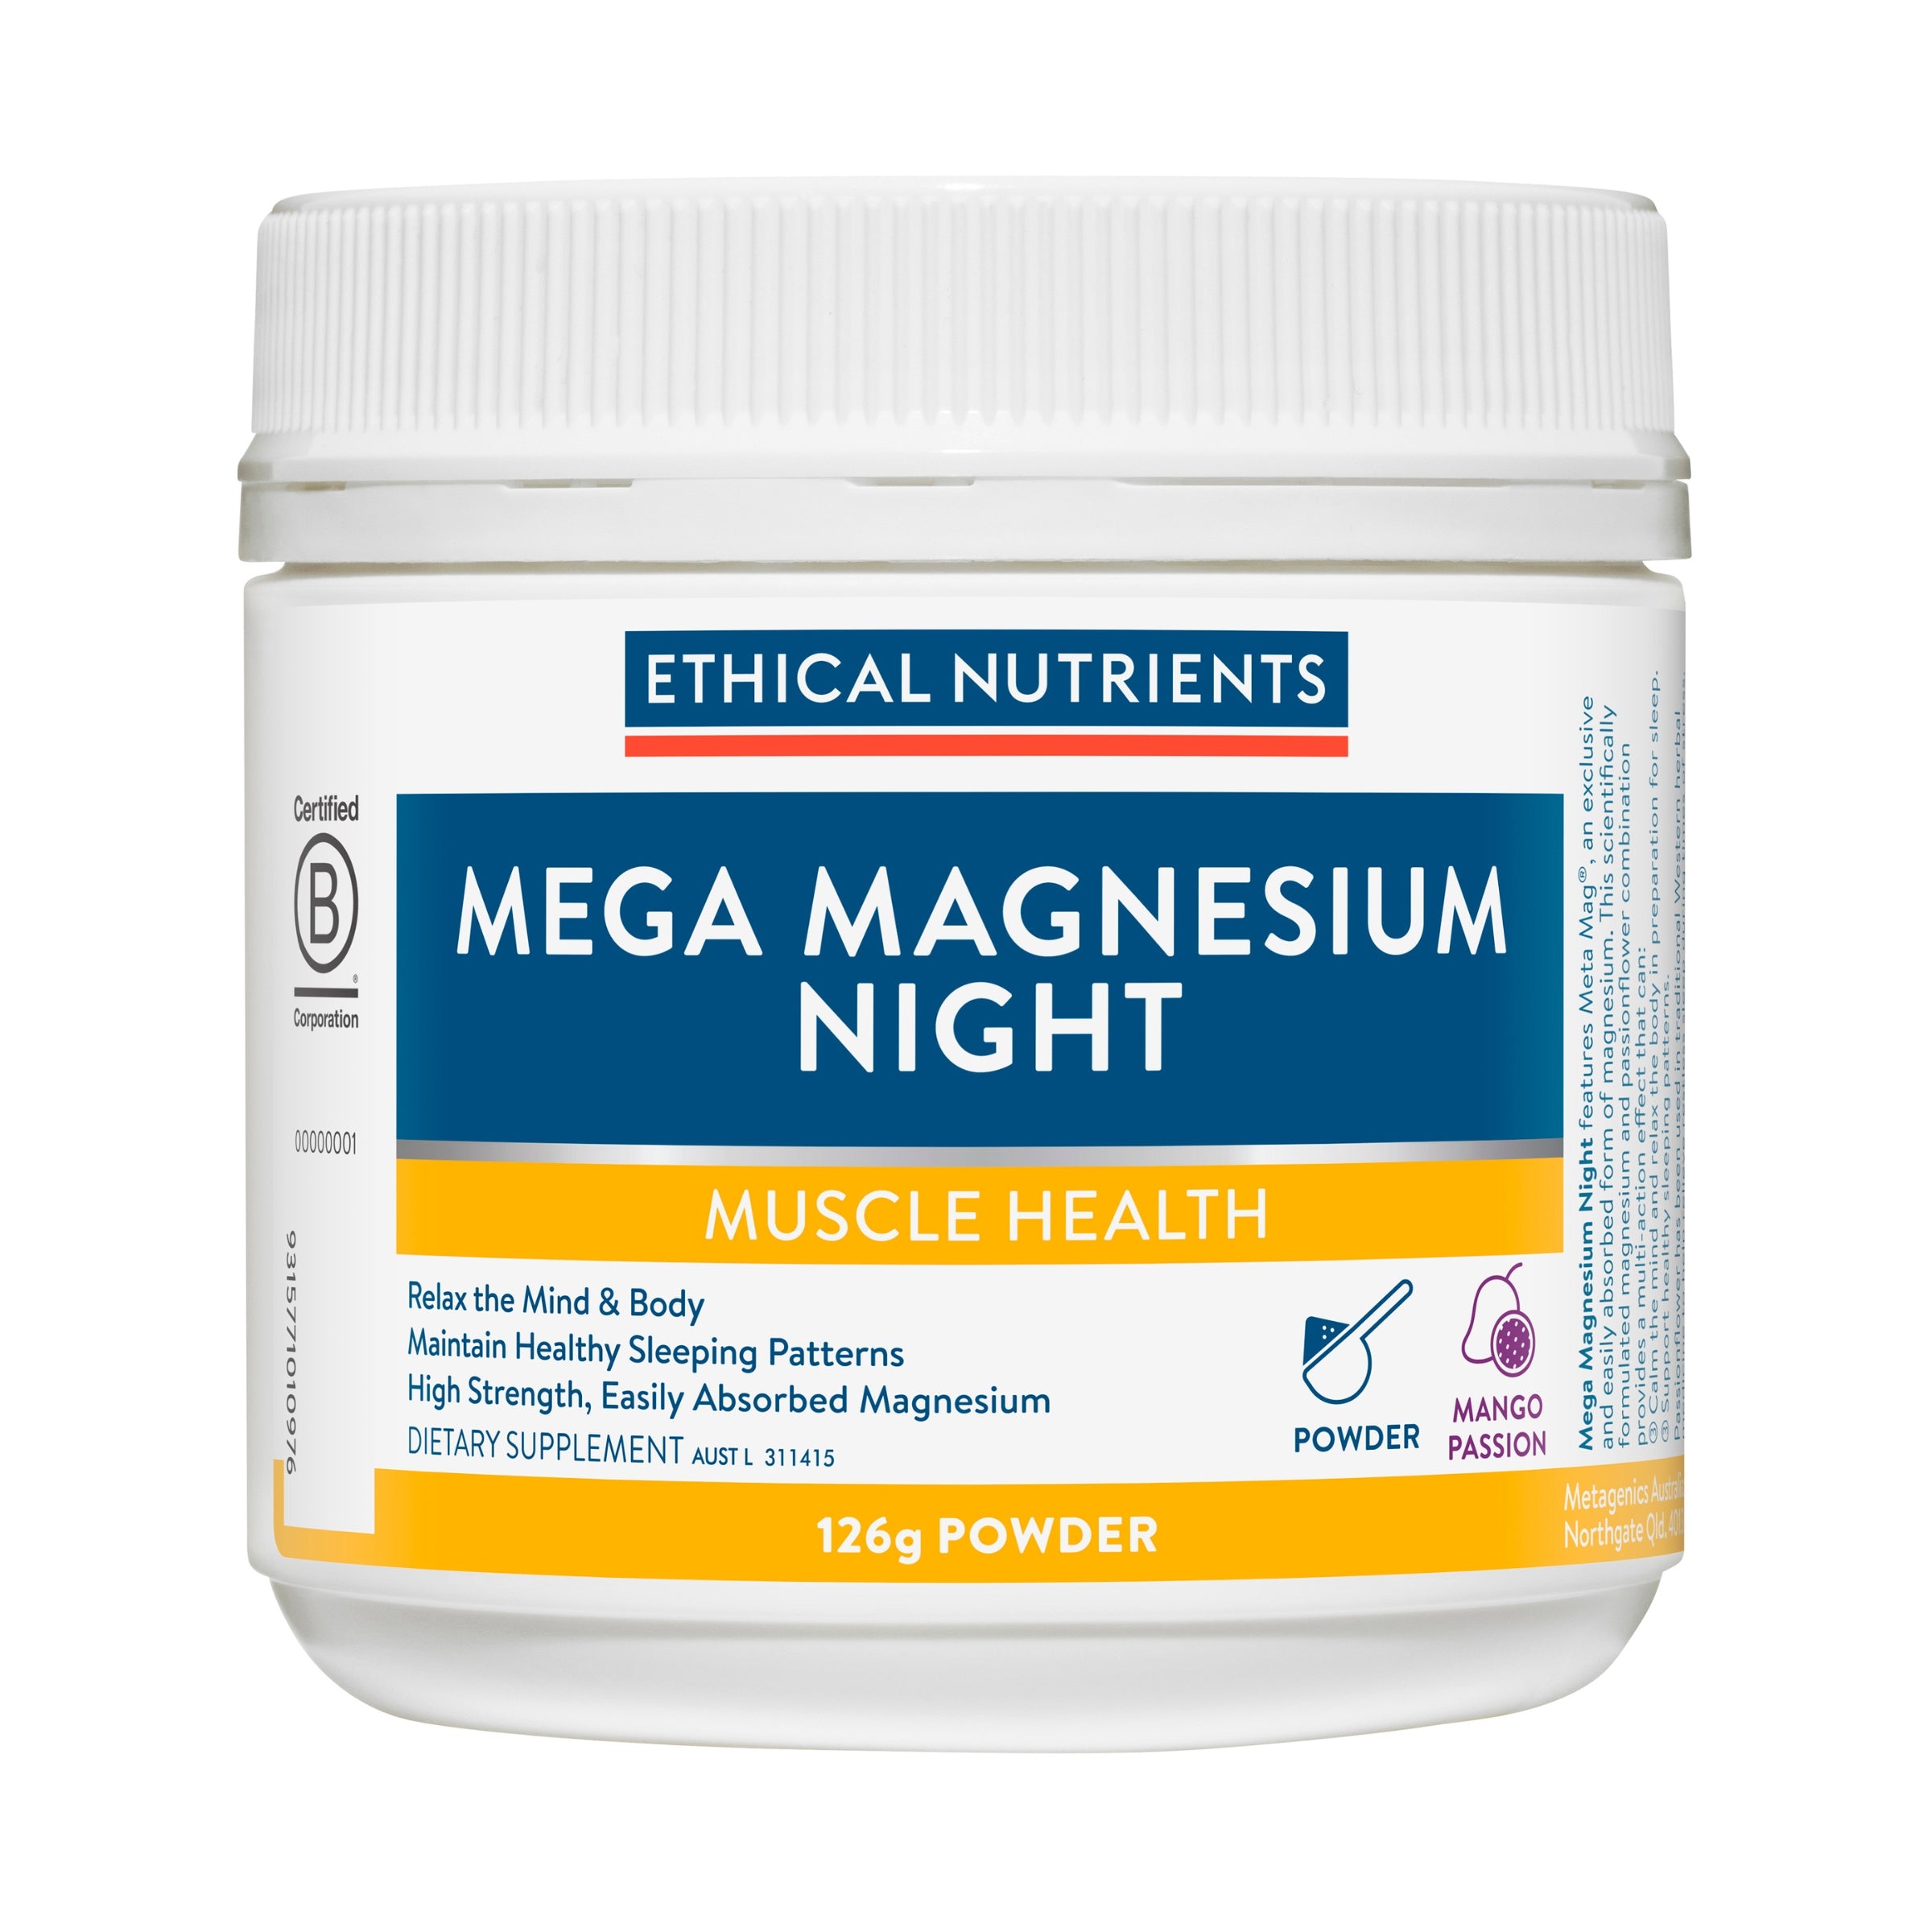 Ethical Nutrients Mega Magnesium Night 126g Powder